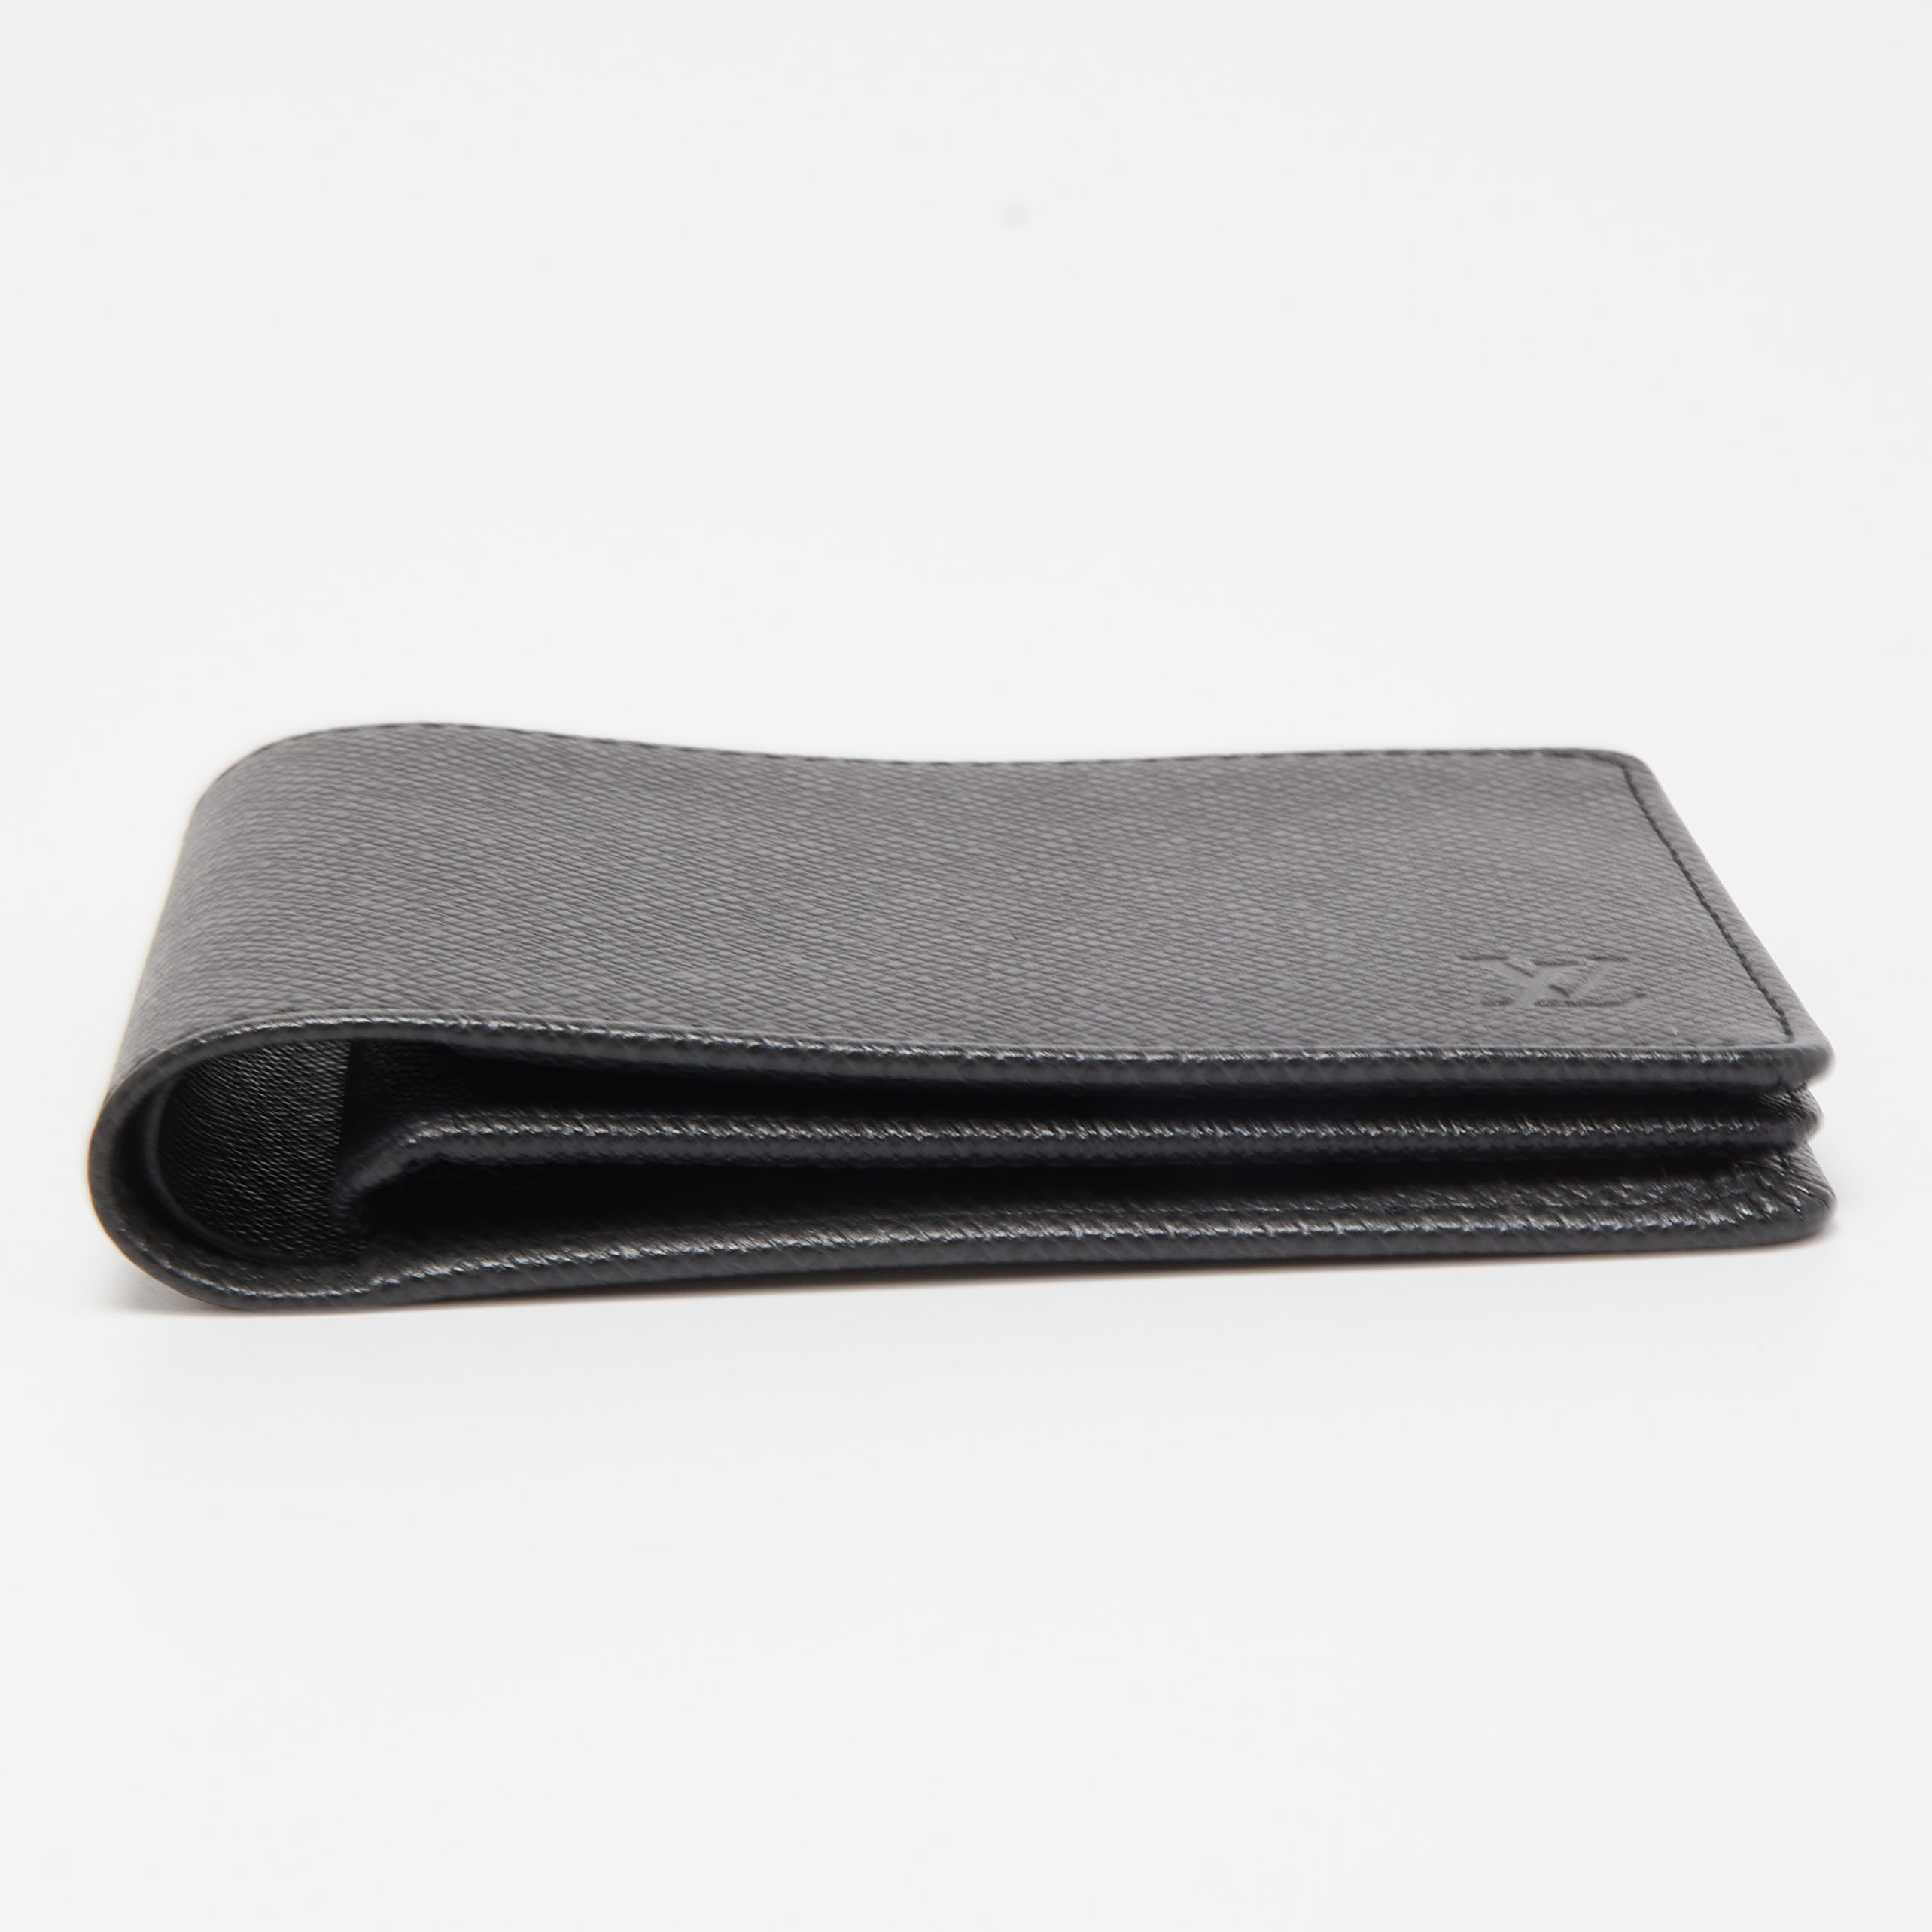 Louis Vuitton Black Taiga Leather Bifold Wallet